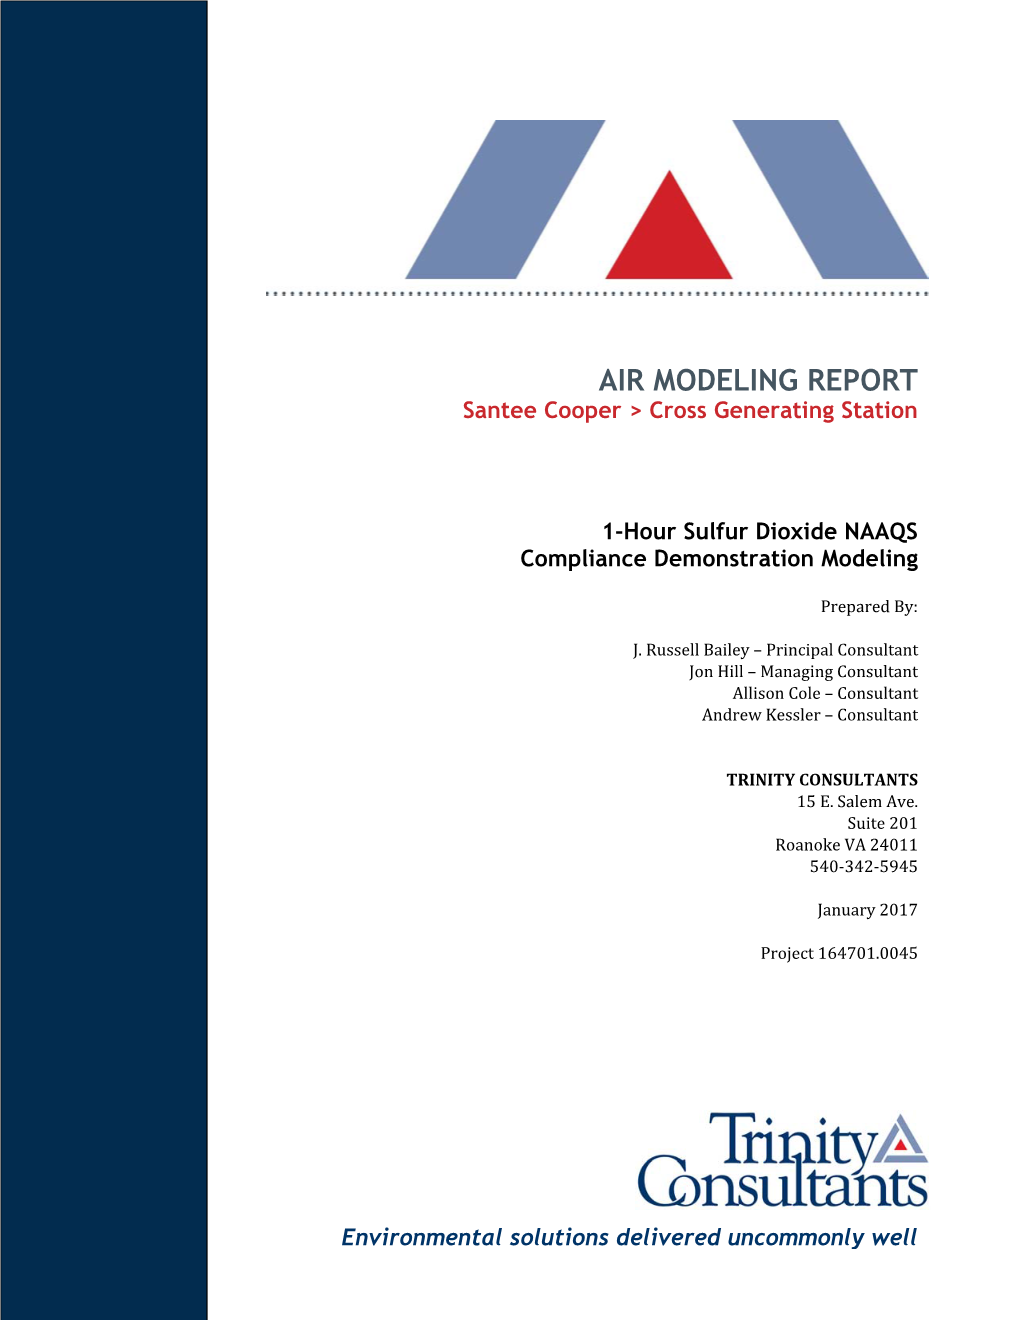 Santee Cooper Cross Generating Station Modeling Report